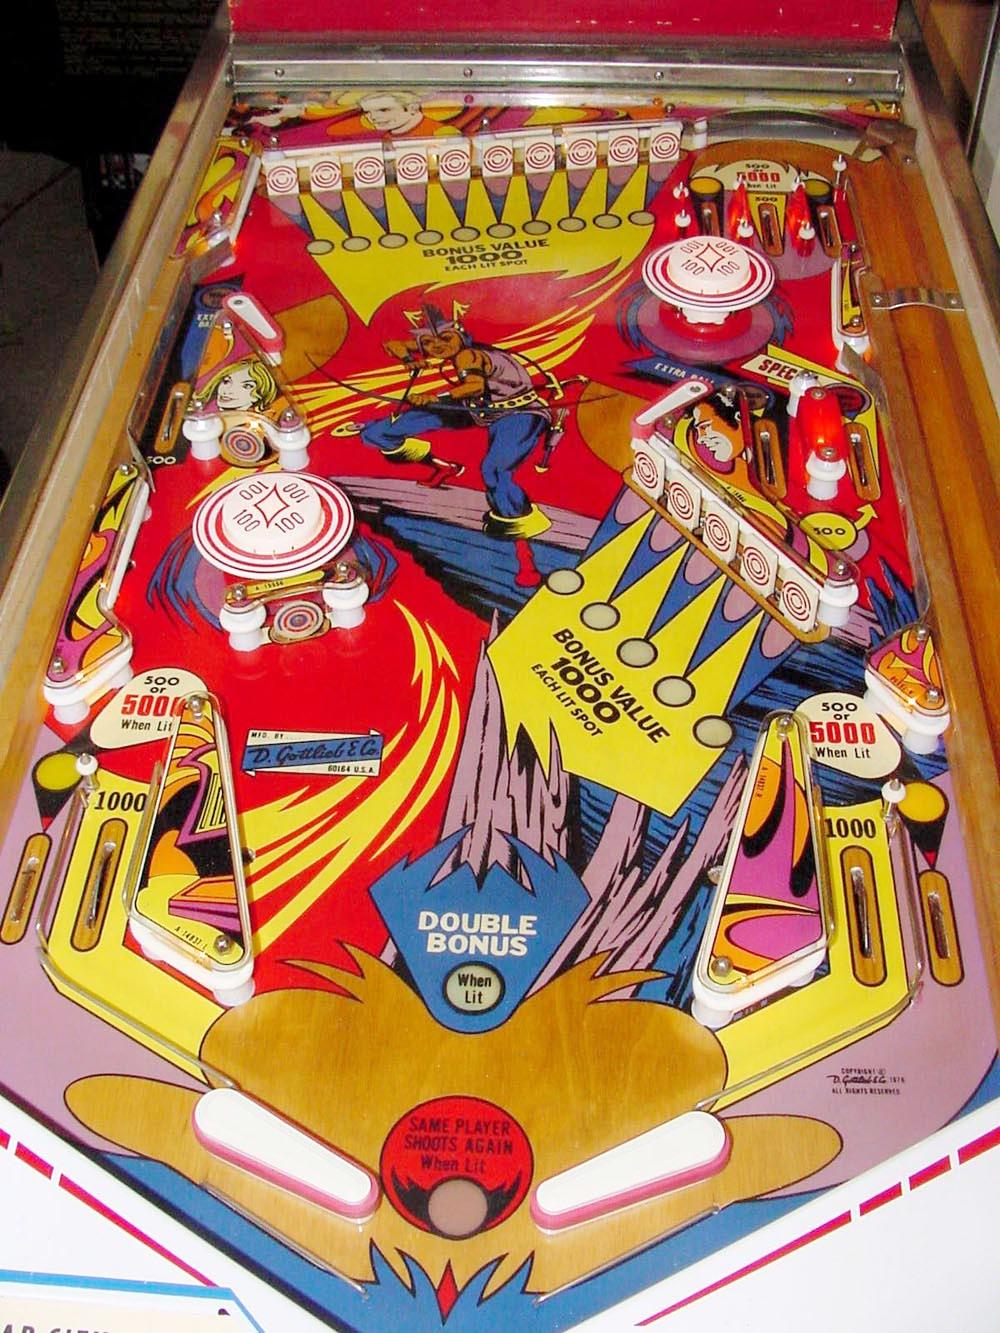 gottlieb pinball machine for sale